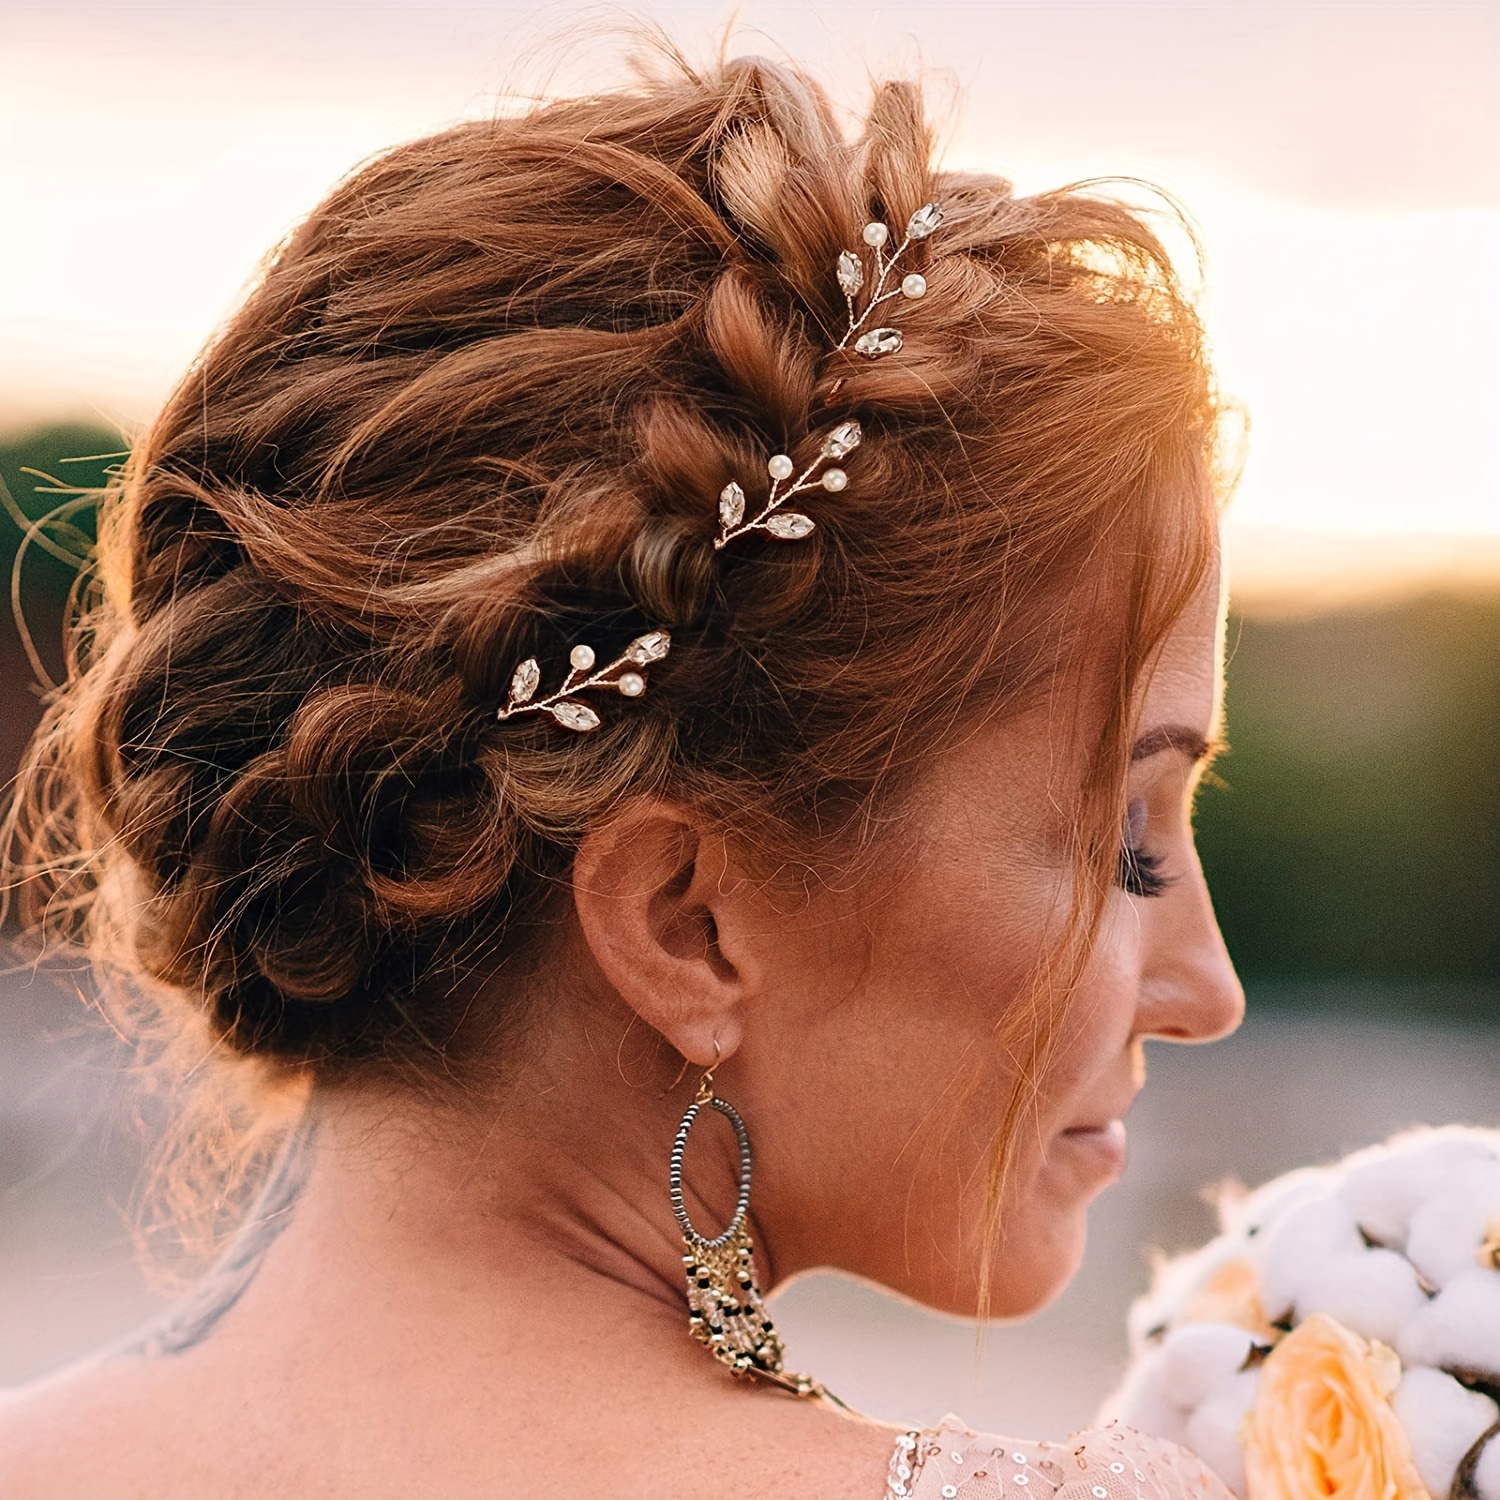 

6 Pcs Faux Pearl Rhinestones Flower Bridal U Shaped Hair Clips, Crystal Wedding Hair Piece Hair Accessories Party Hairpins For Bride Bridesmaids